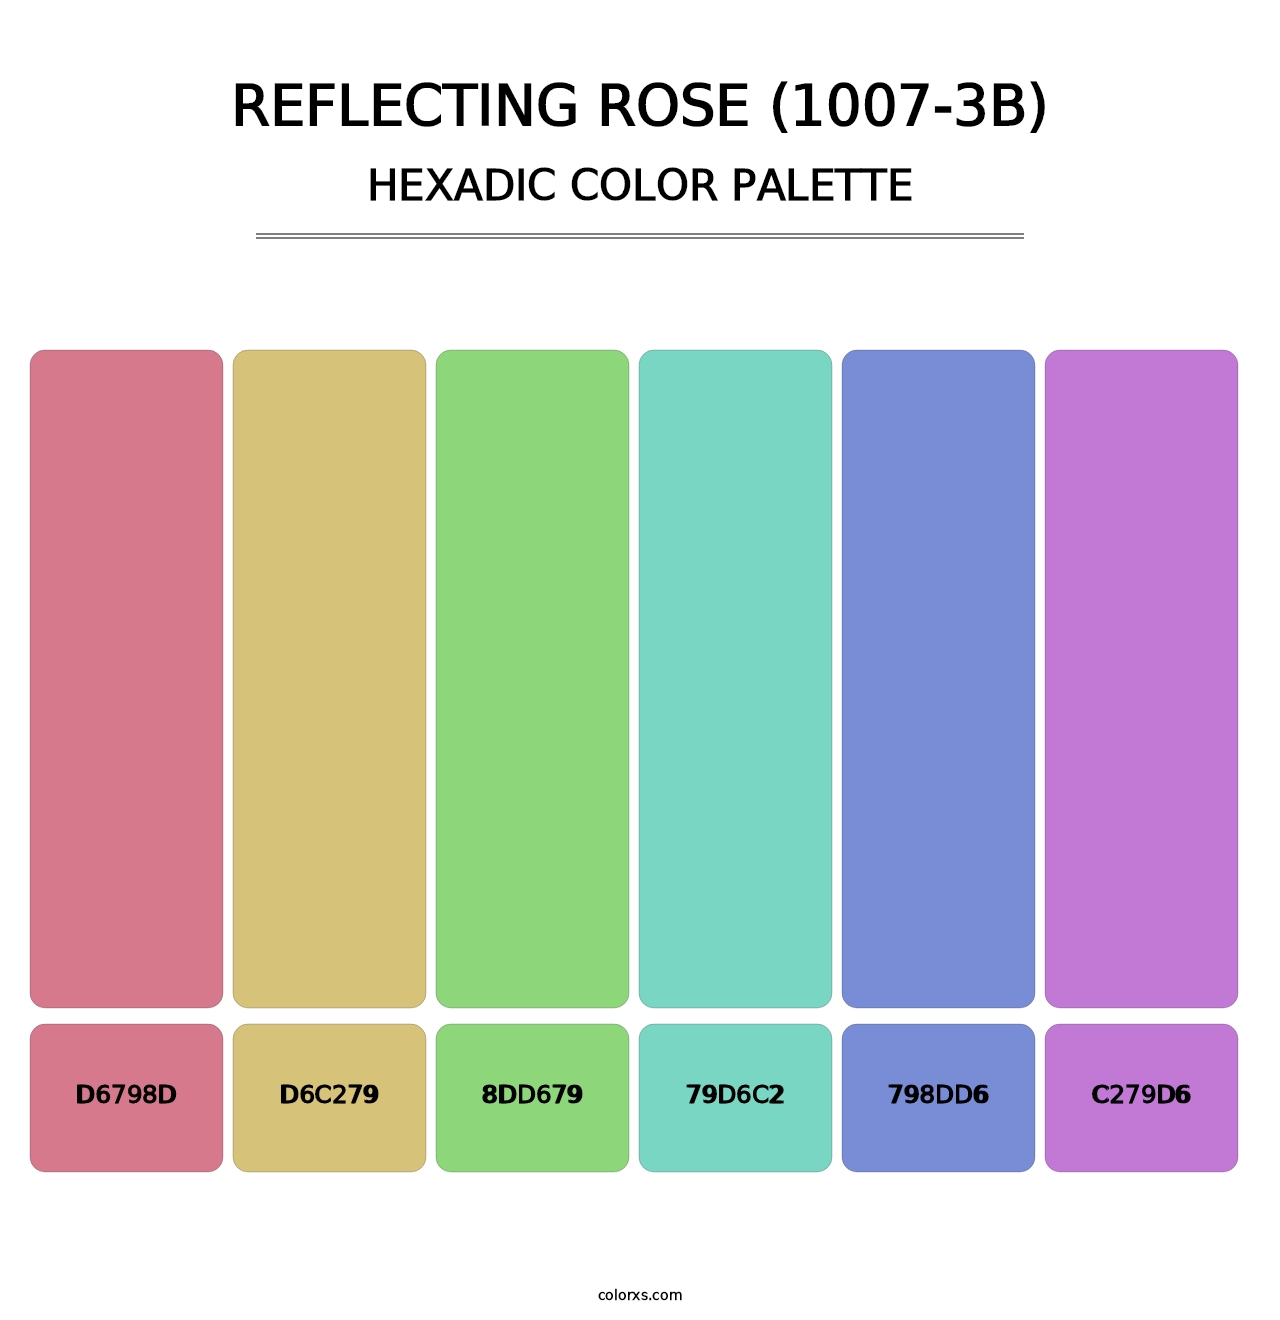 Reflecting Rose (1007-3B) - Hexadic Color Palette